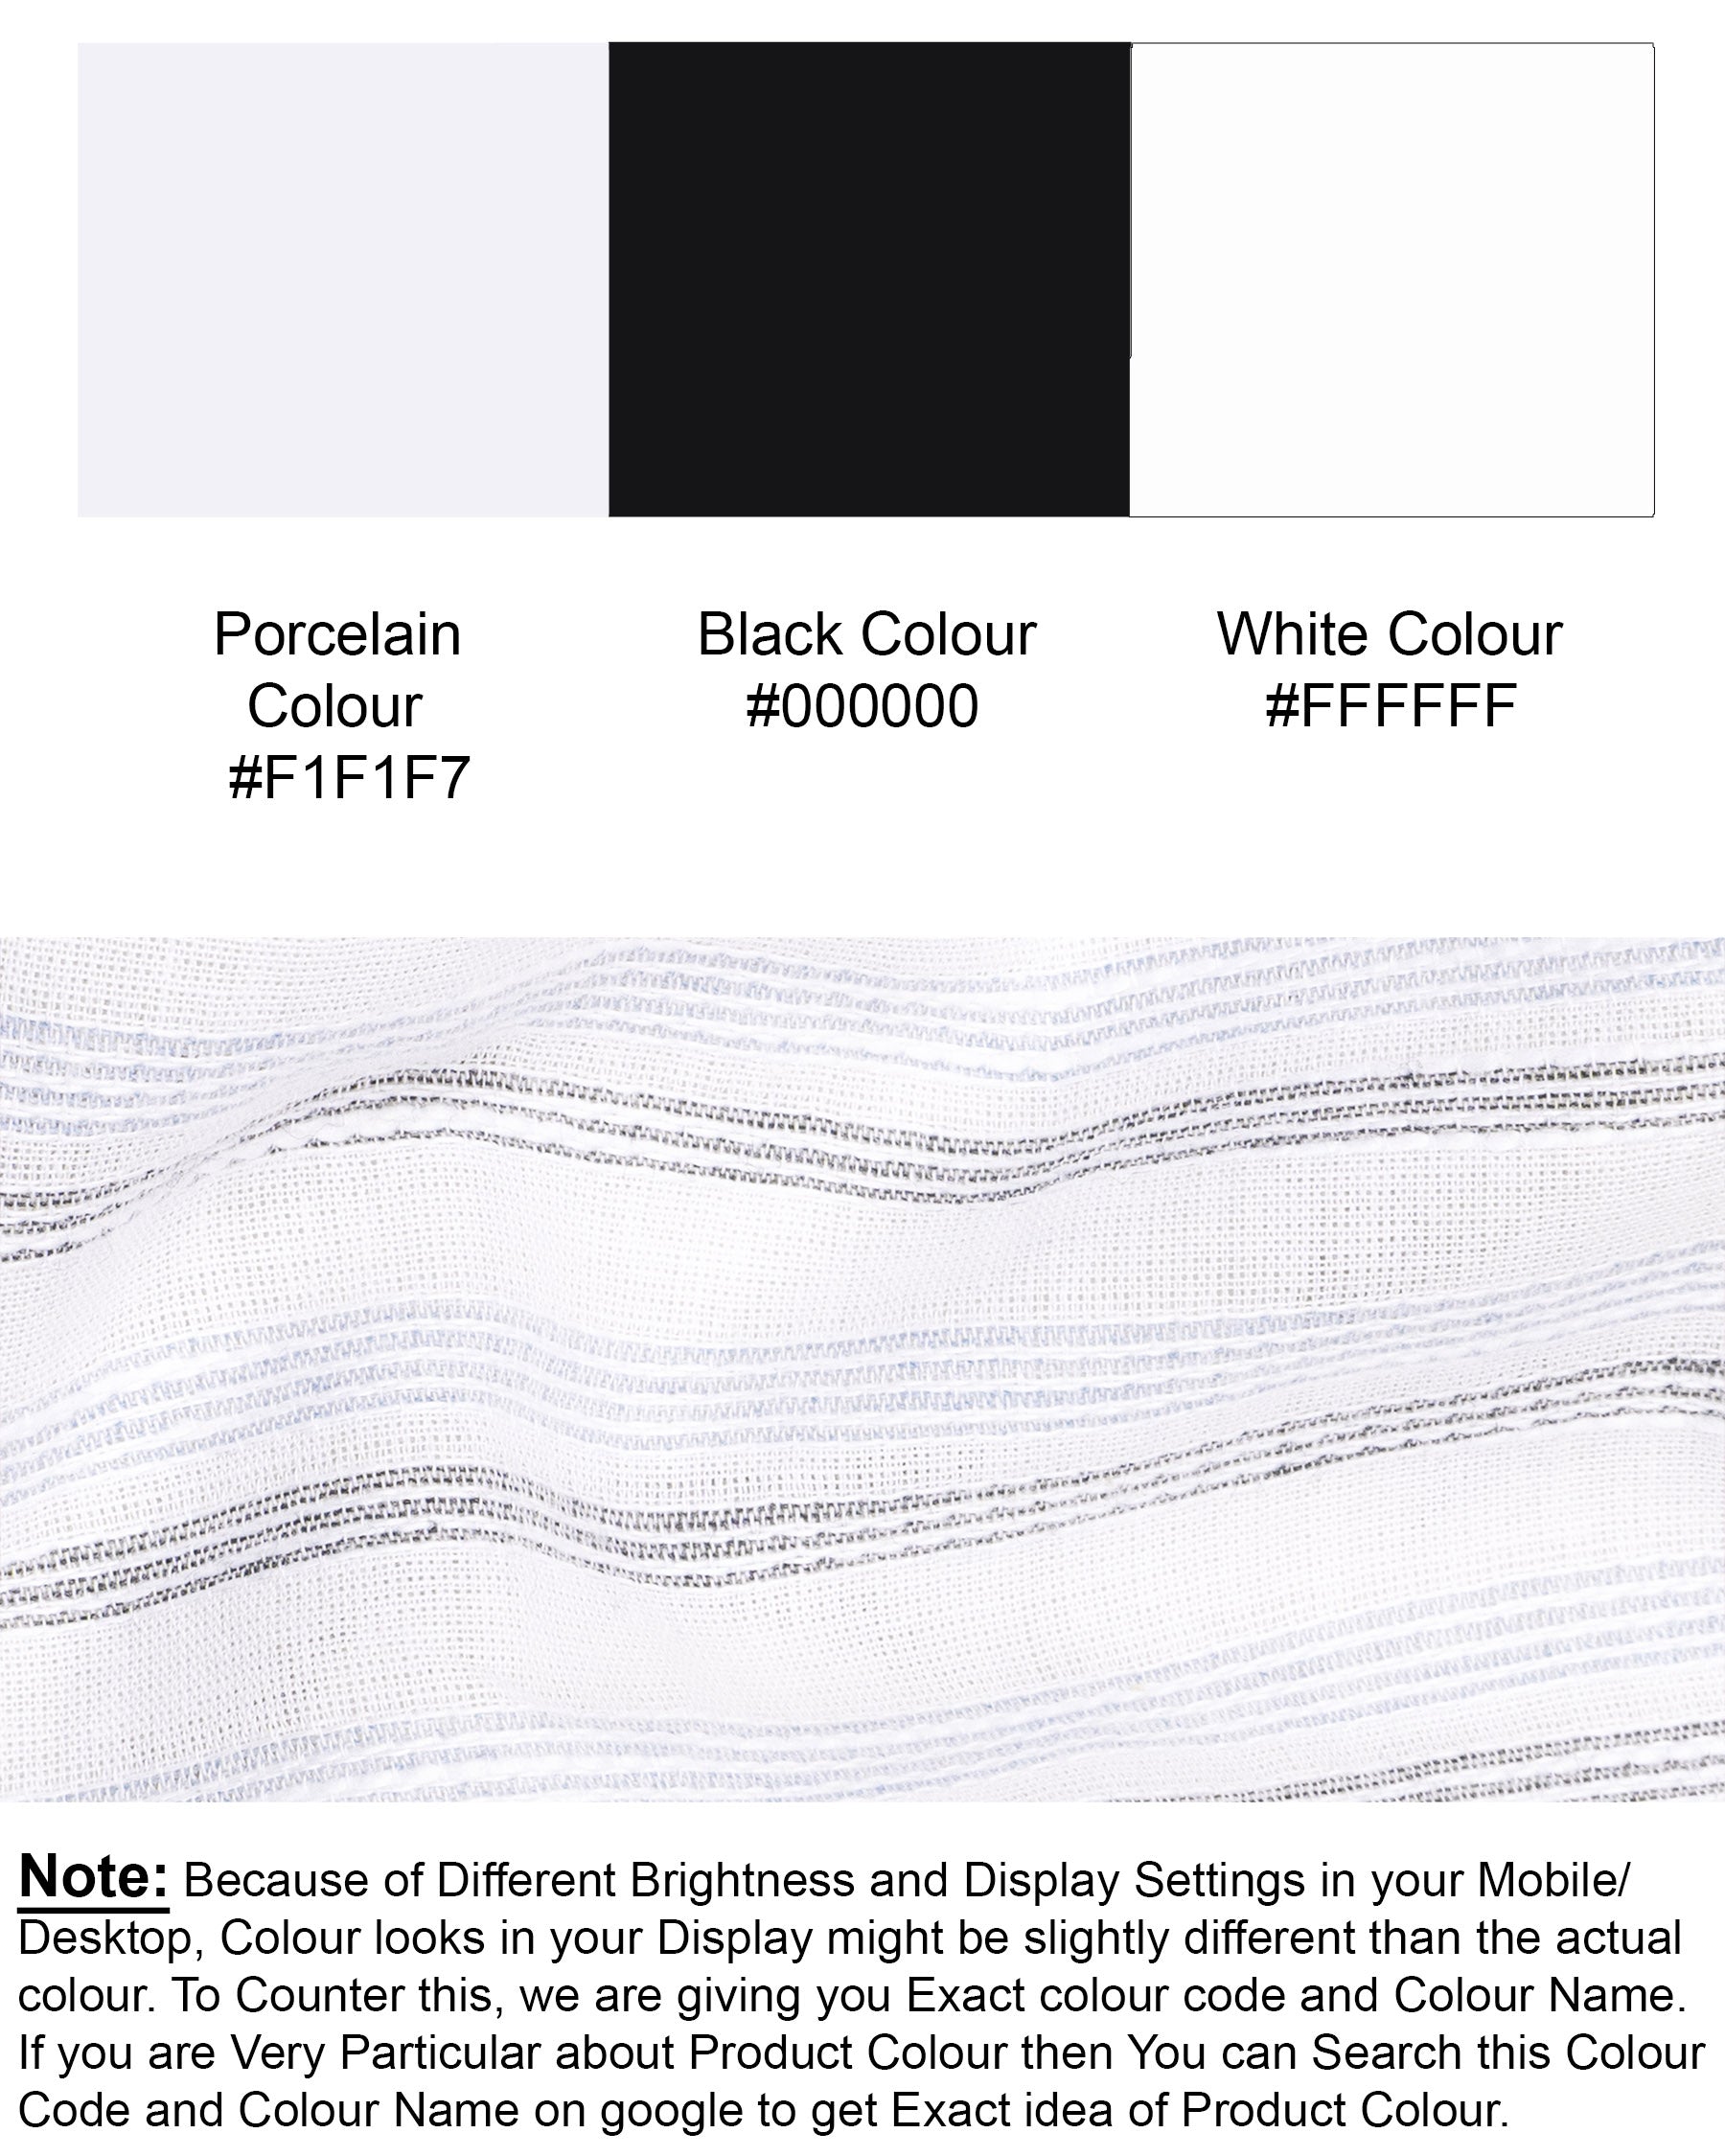 Porcelain Striped Dobby Textured Premium Giza Cotton Shirt 6602-BLK-38, 6602-BLK-H-38, 6602-BLK-39, 6602-BLK-H-39, 6602-BLK-40, 6602-BLK-H-40, 6602-BLK-42, 6602-BLK-H-42, 6602-BLK-44, 6602-BLK-H-44, 6602-BLK-46, 6602-BLK-H-46, 6602-BLK-48, 6602-BLK-H-48, 6602-BLK-50, 6602-BLK-H-50, 6602-BLK-52, 6602-BLK-H-52